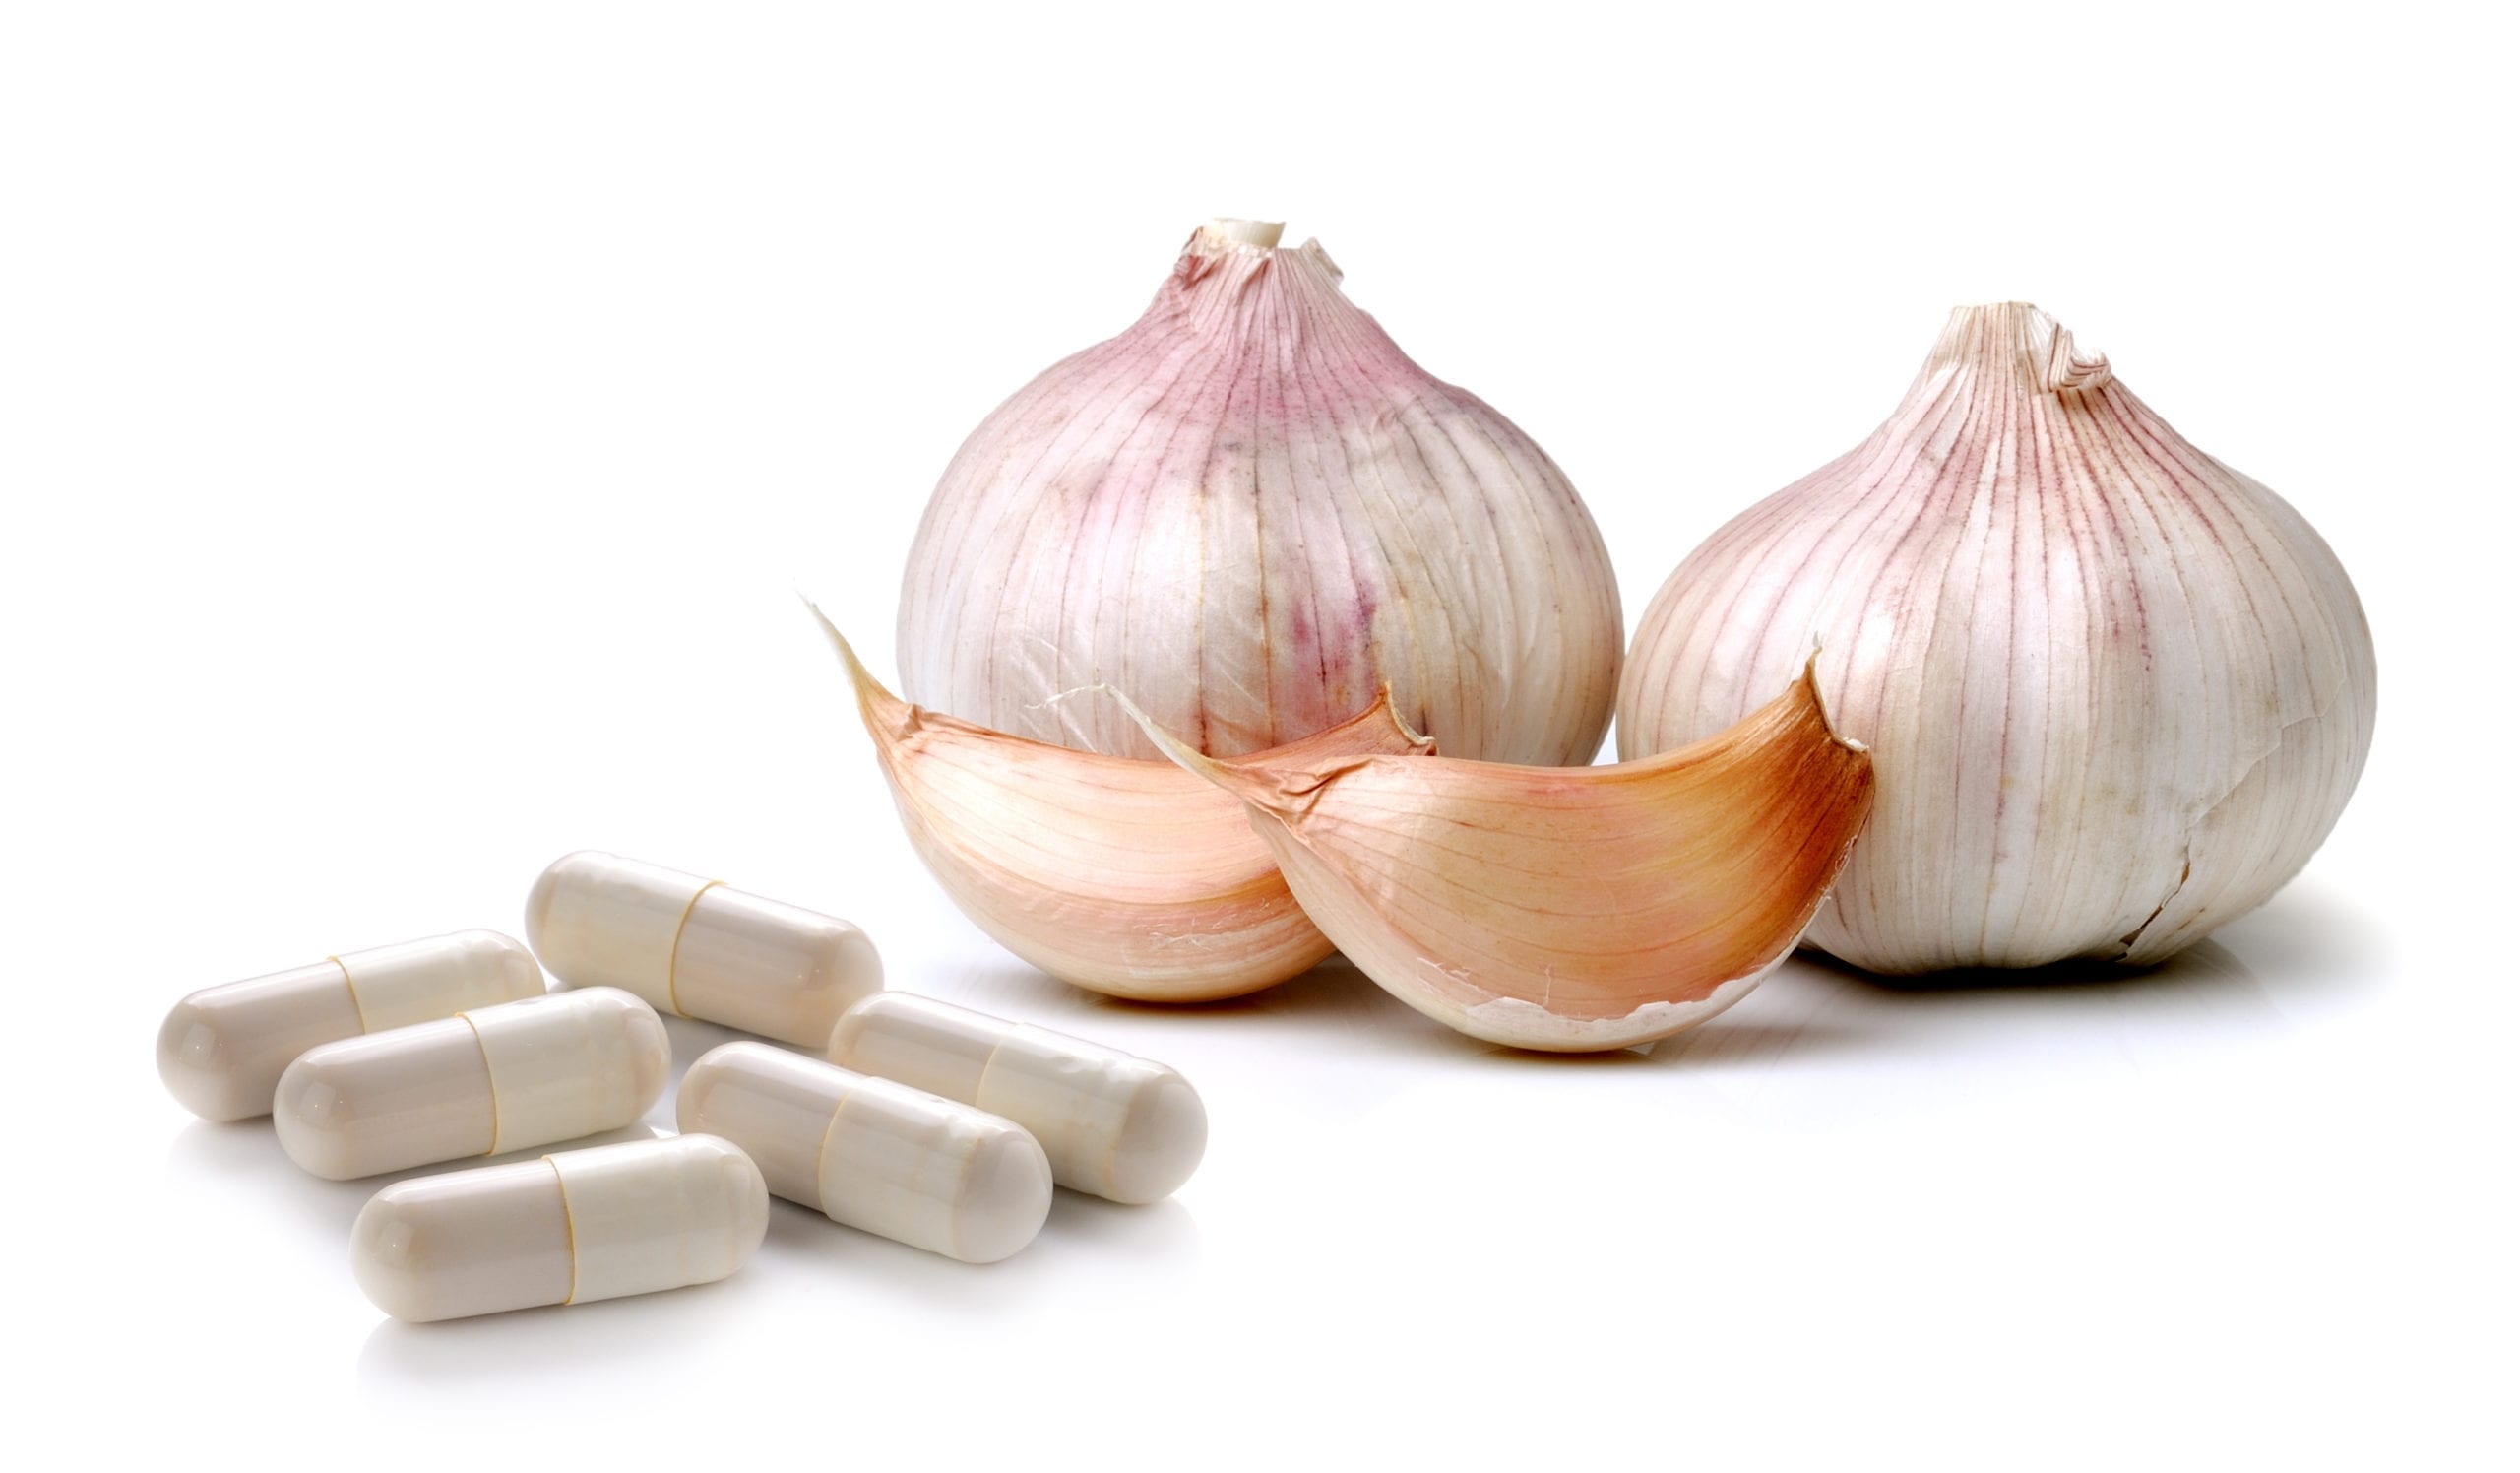 Garlic with white pills